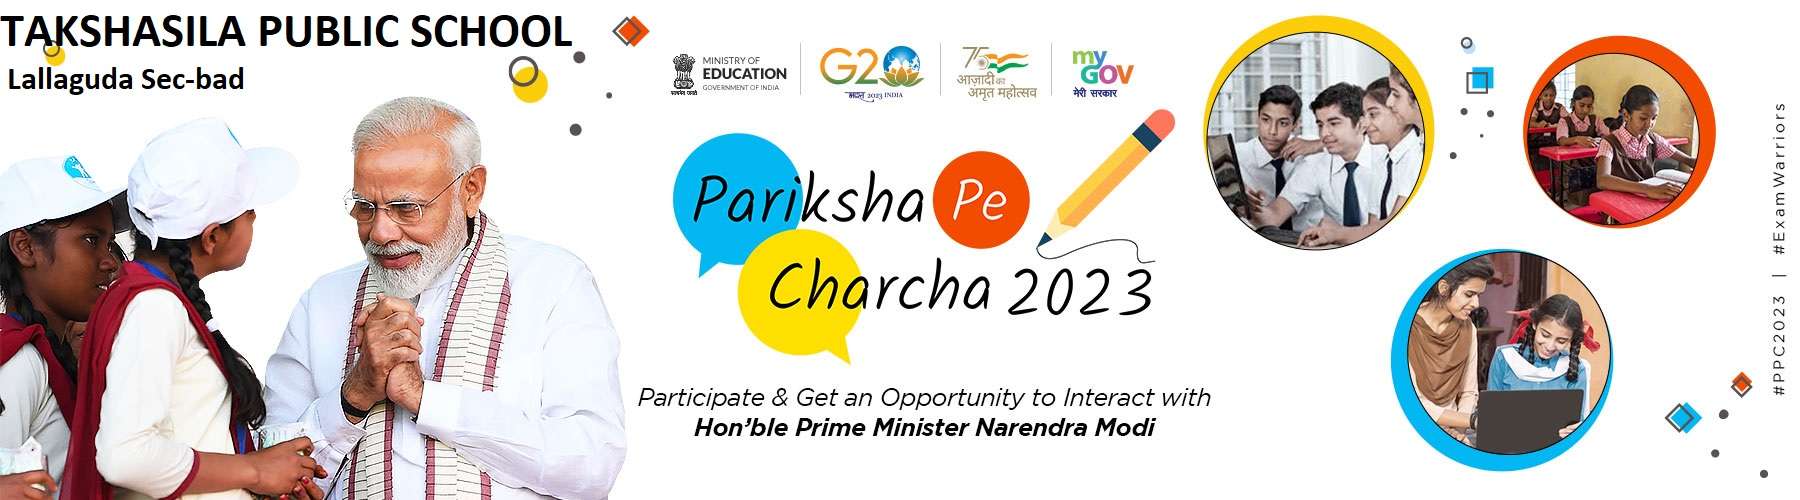 Few Glimpses from the Pariksha pe Charcha 2023.